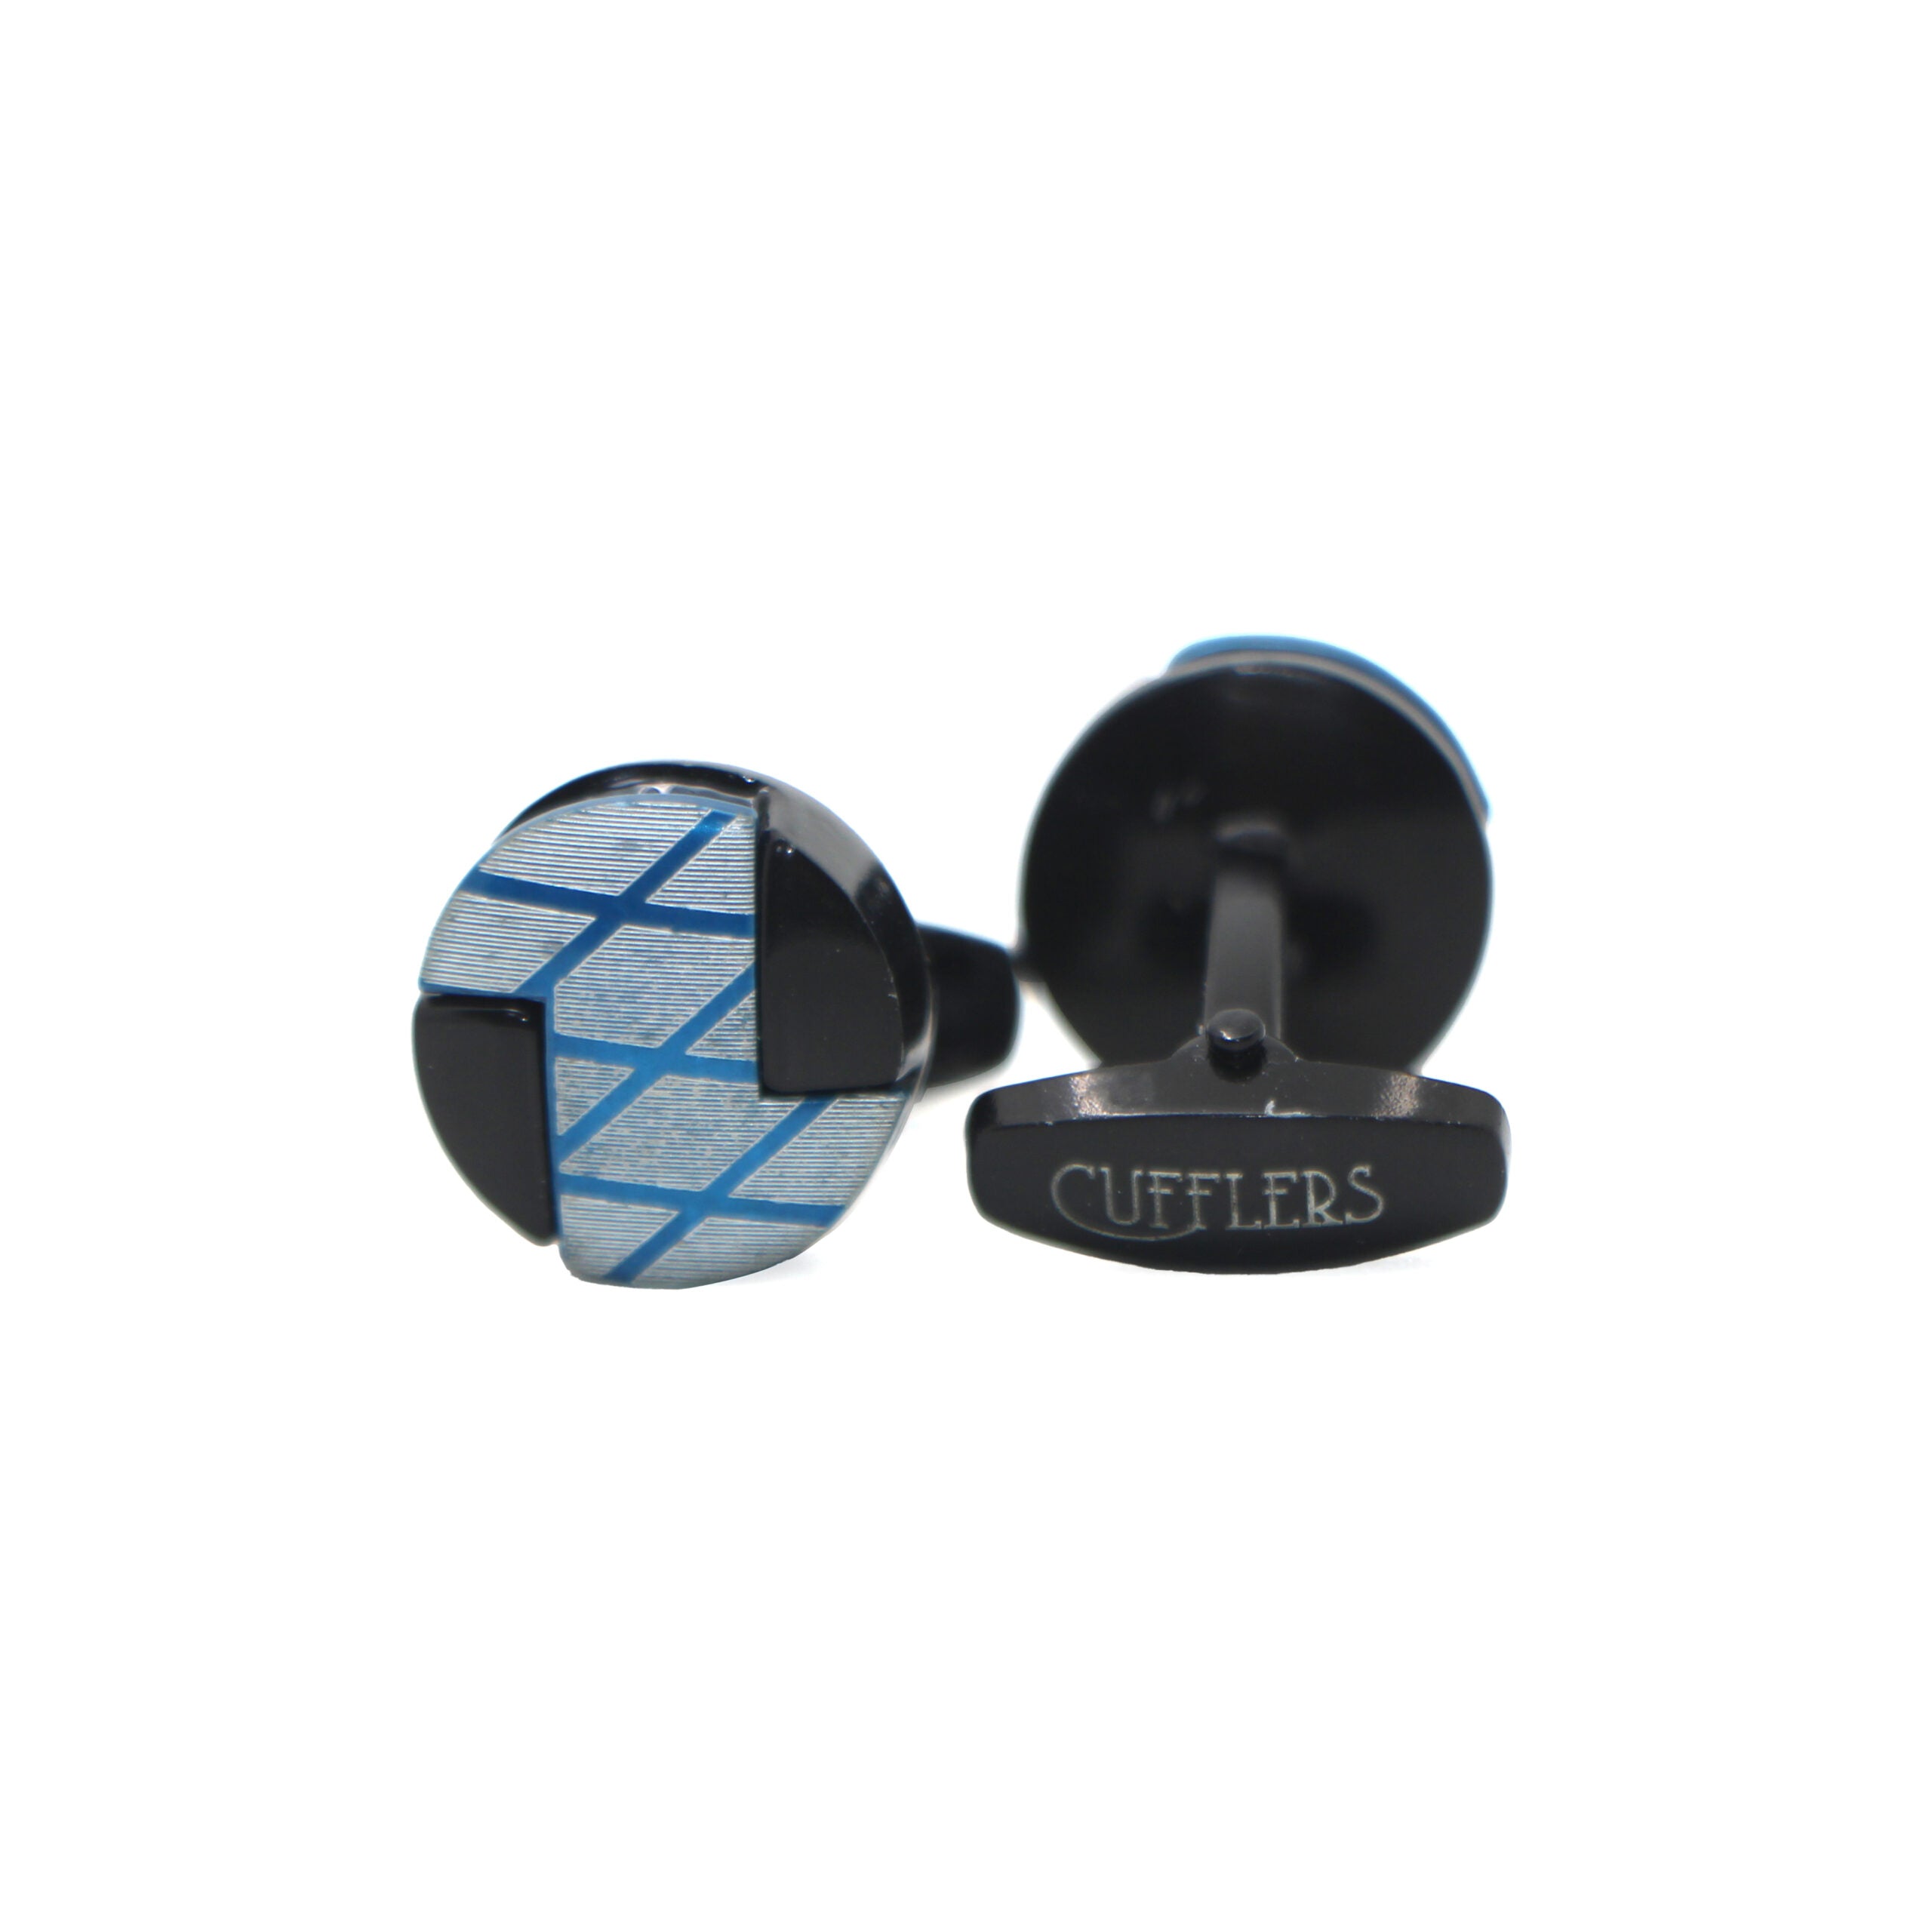 Cufflers Novelty Cufflinks with Free Gift Box - CU-2010